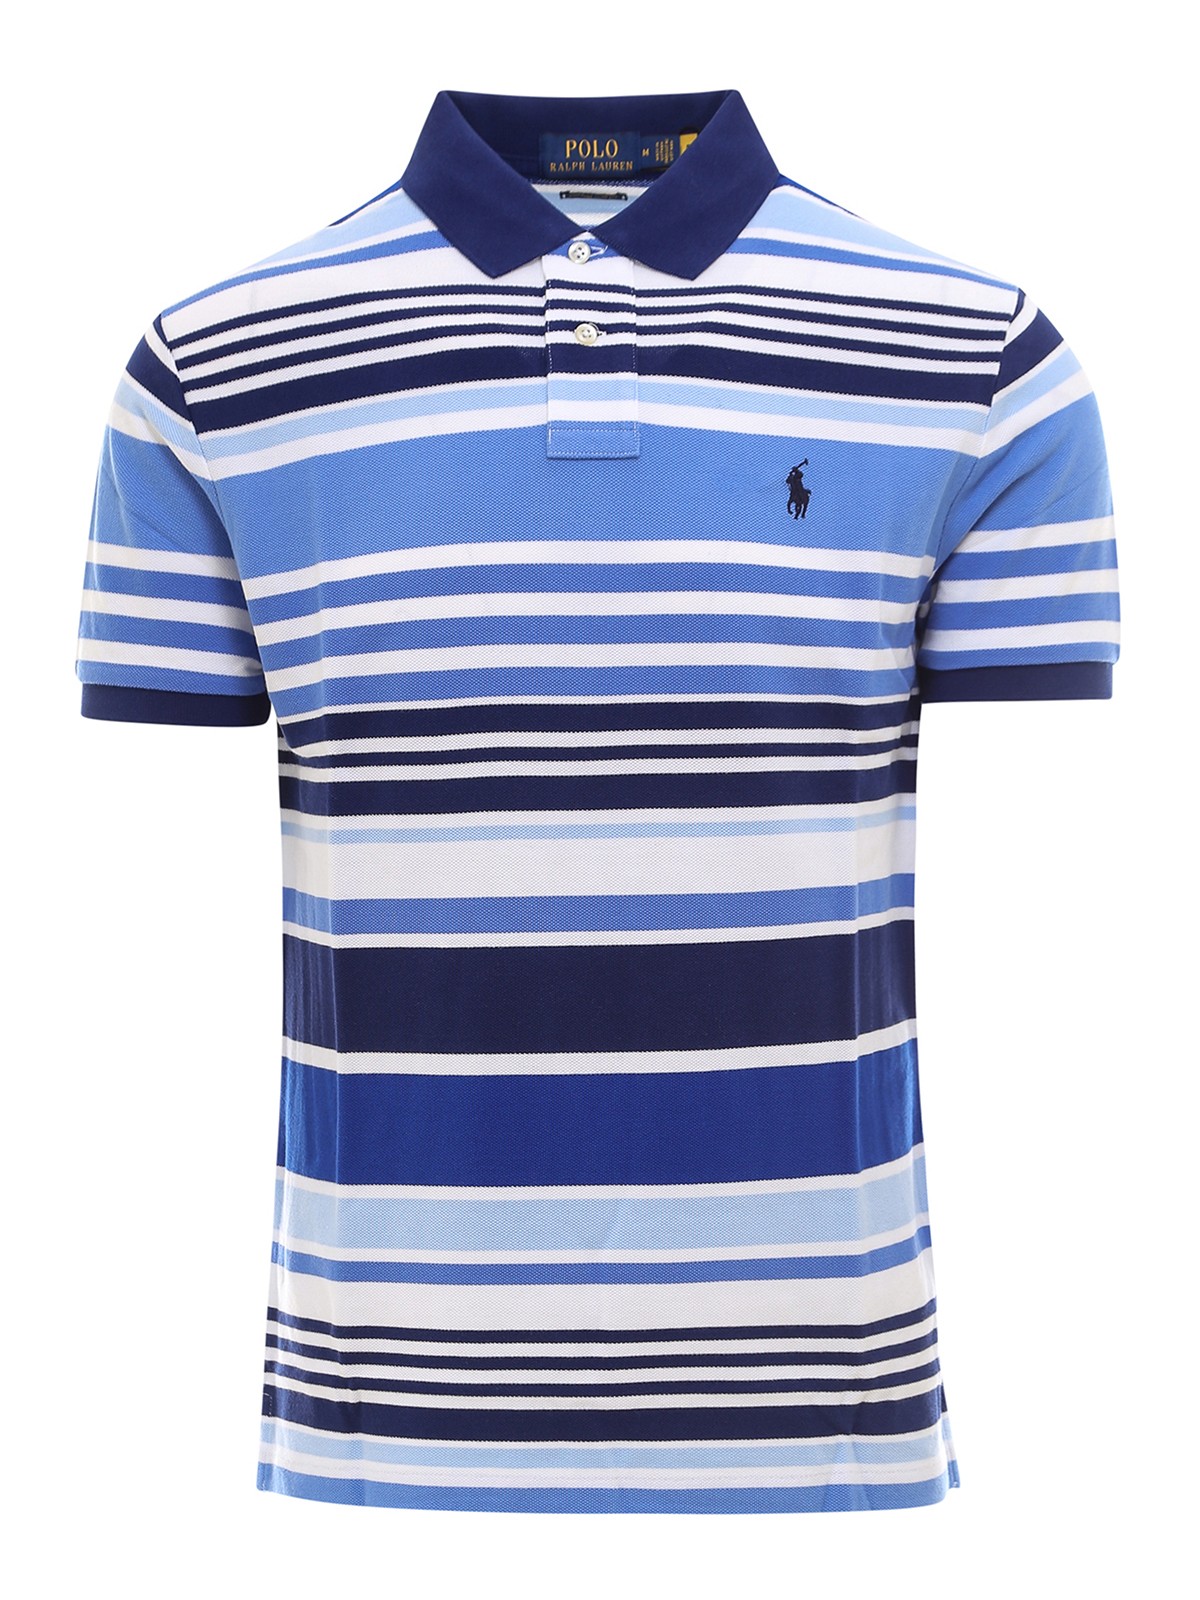 Polo Ralph Lauren Multi Stripe Polo Shirt | vlr.eng.br